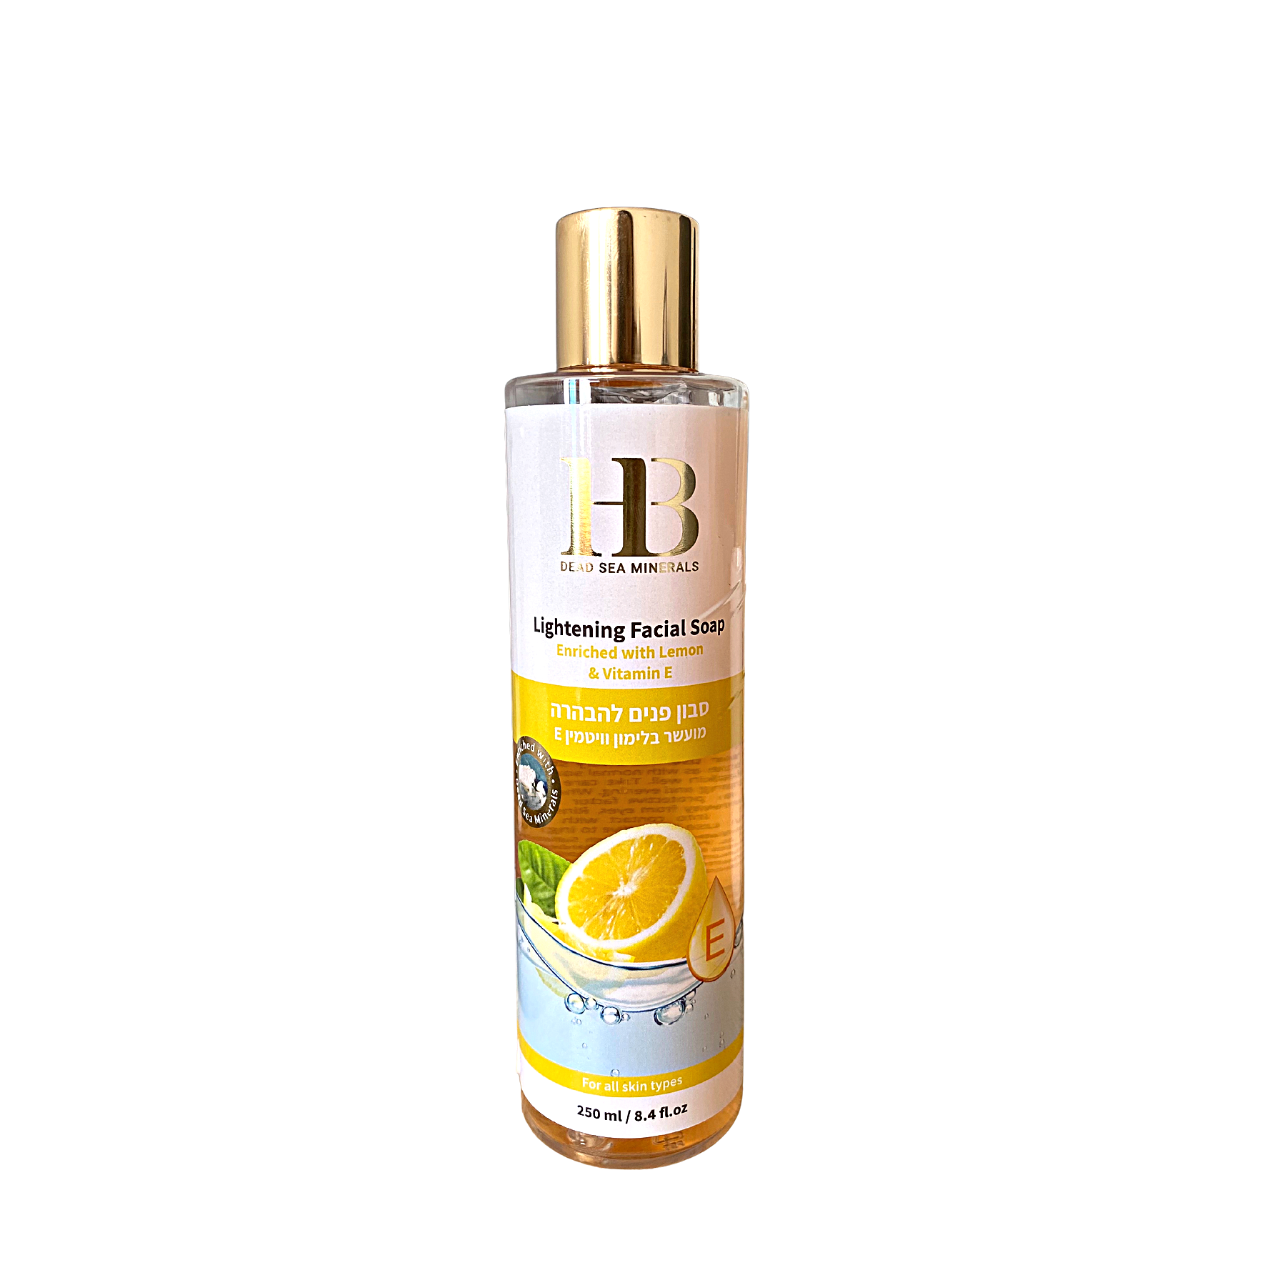 Sữa rửa mặt làm trắng da Lightening Facial Soap Enriched with Lemon & Vitamin E 250ml - Health and Beauty - Israel